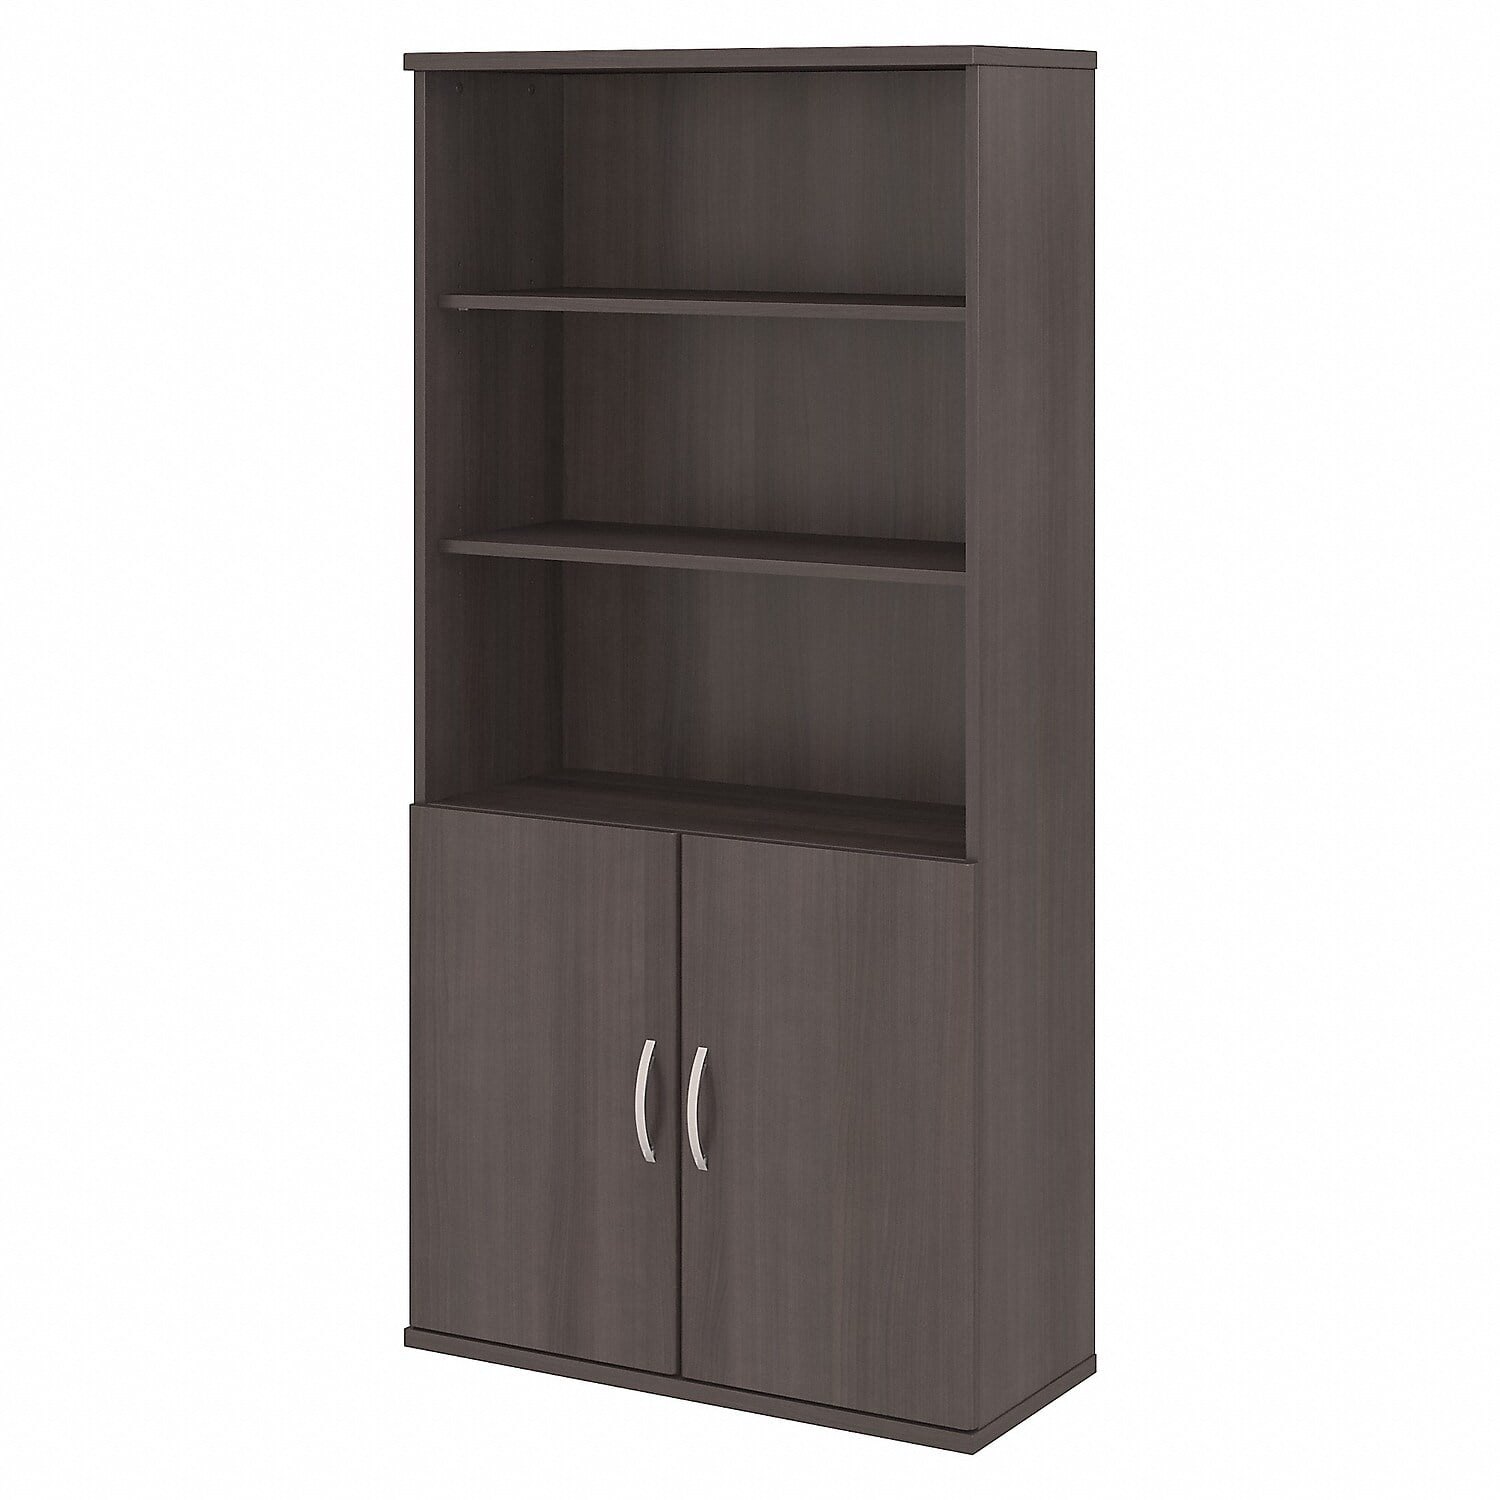 Scranton & Co 5 Shelf Bookcase in Washed Gray 